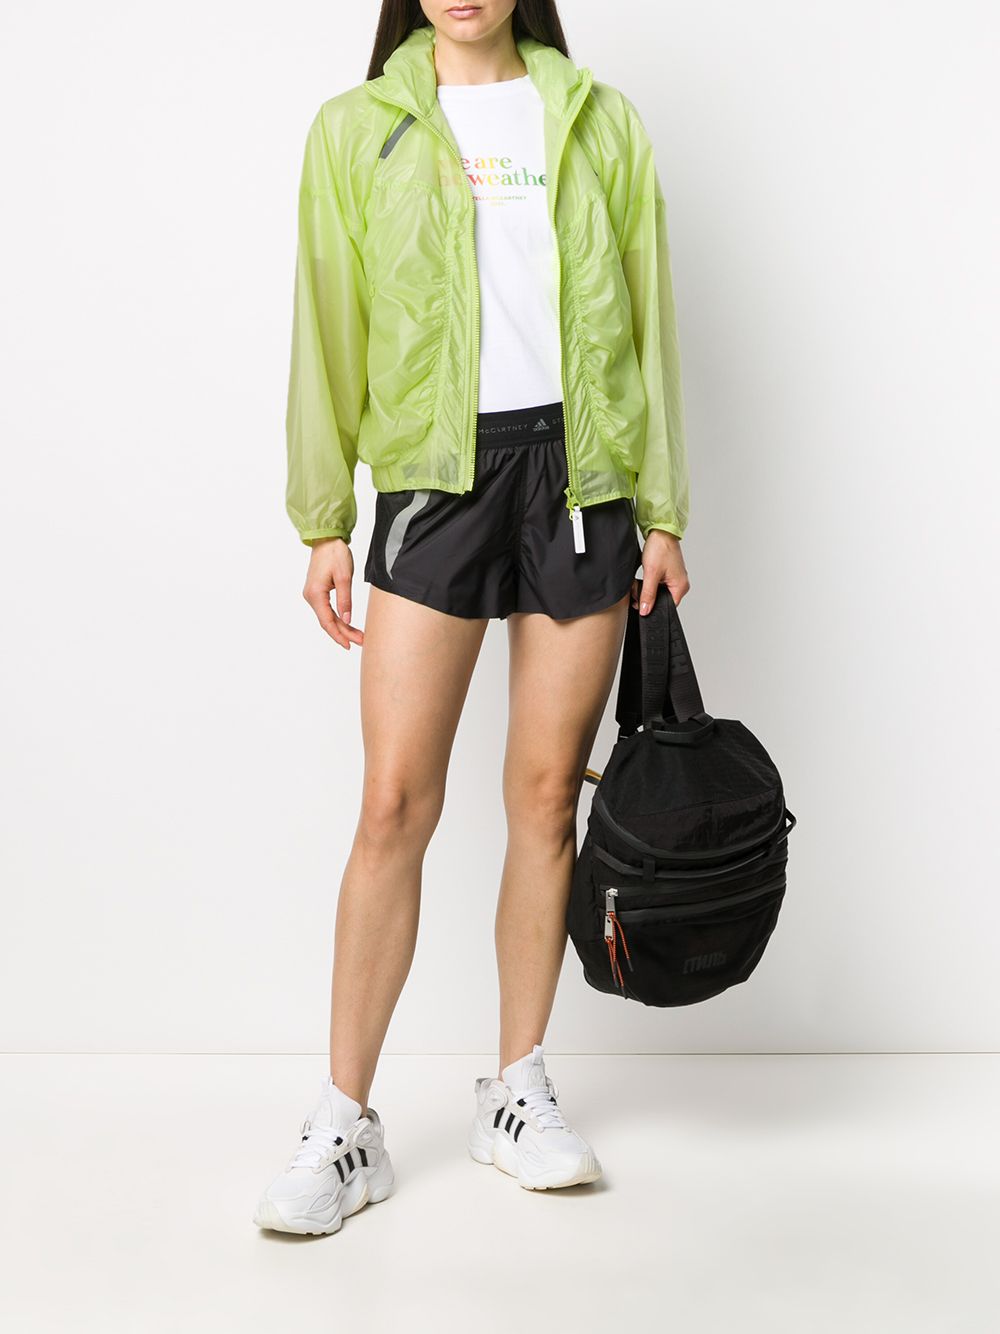 фото Adidas by stella mccartney легкая непромокаемая куртка